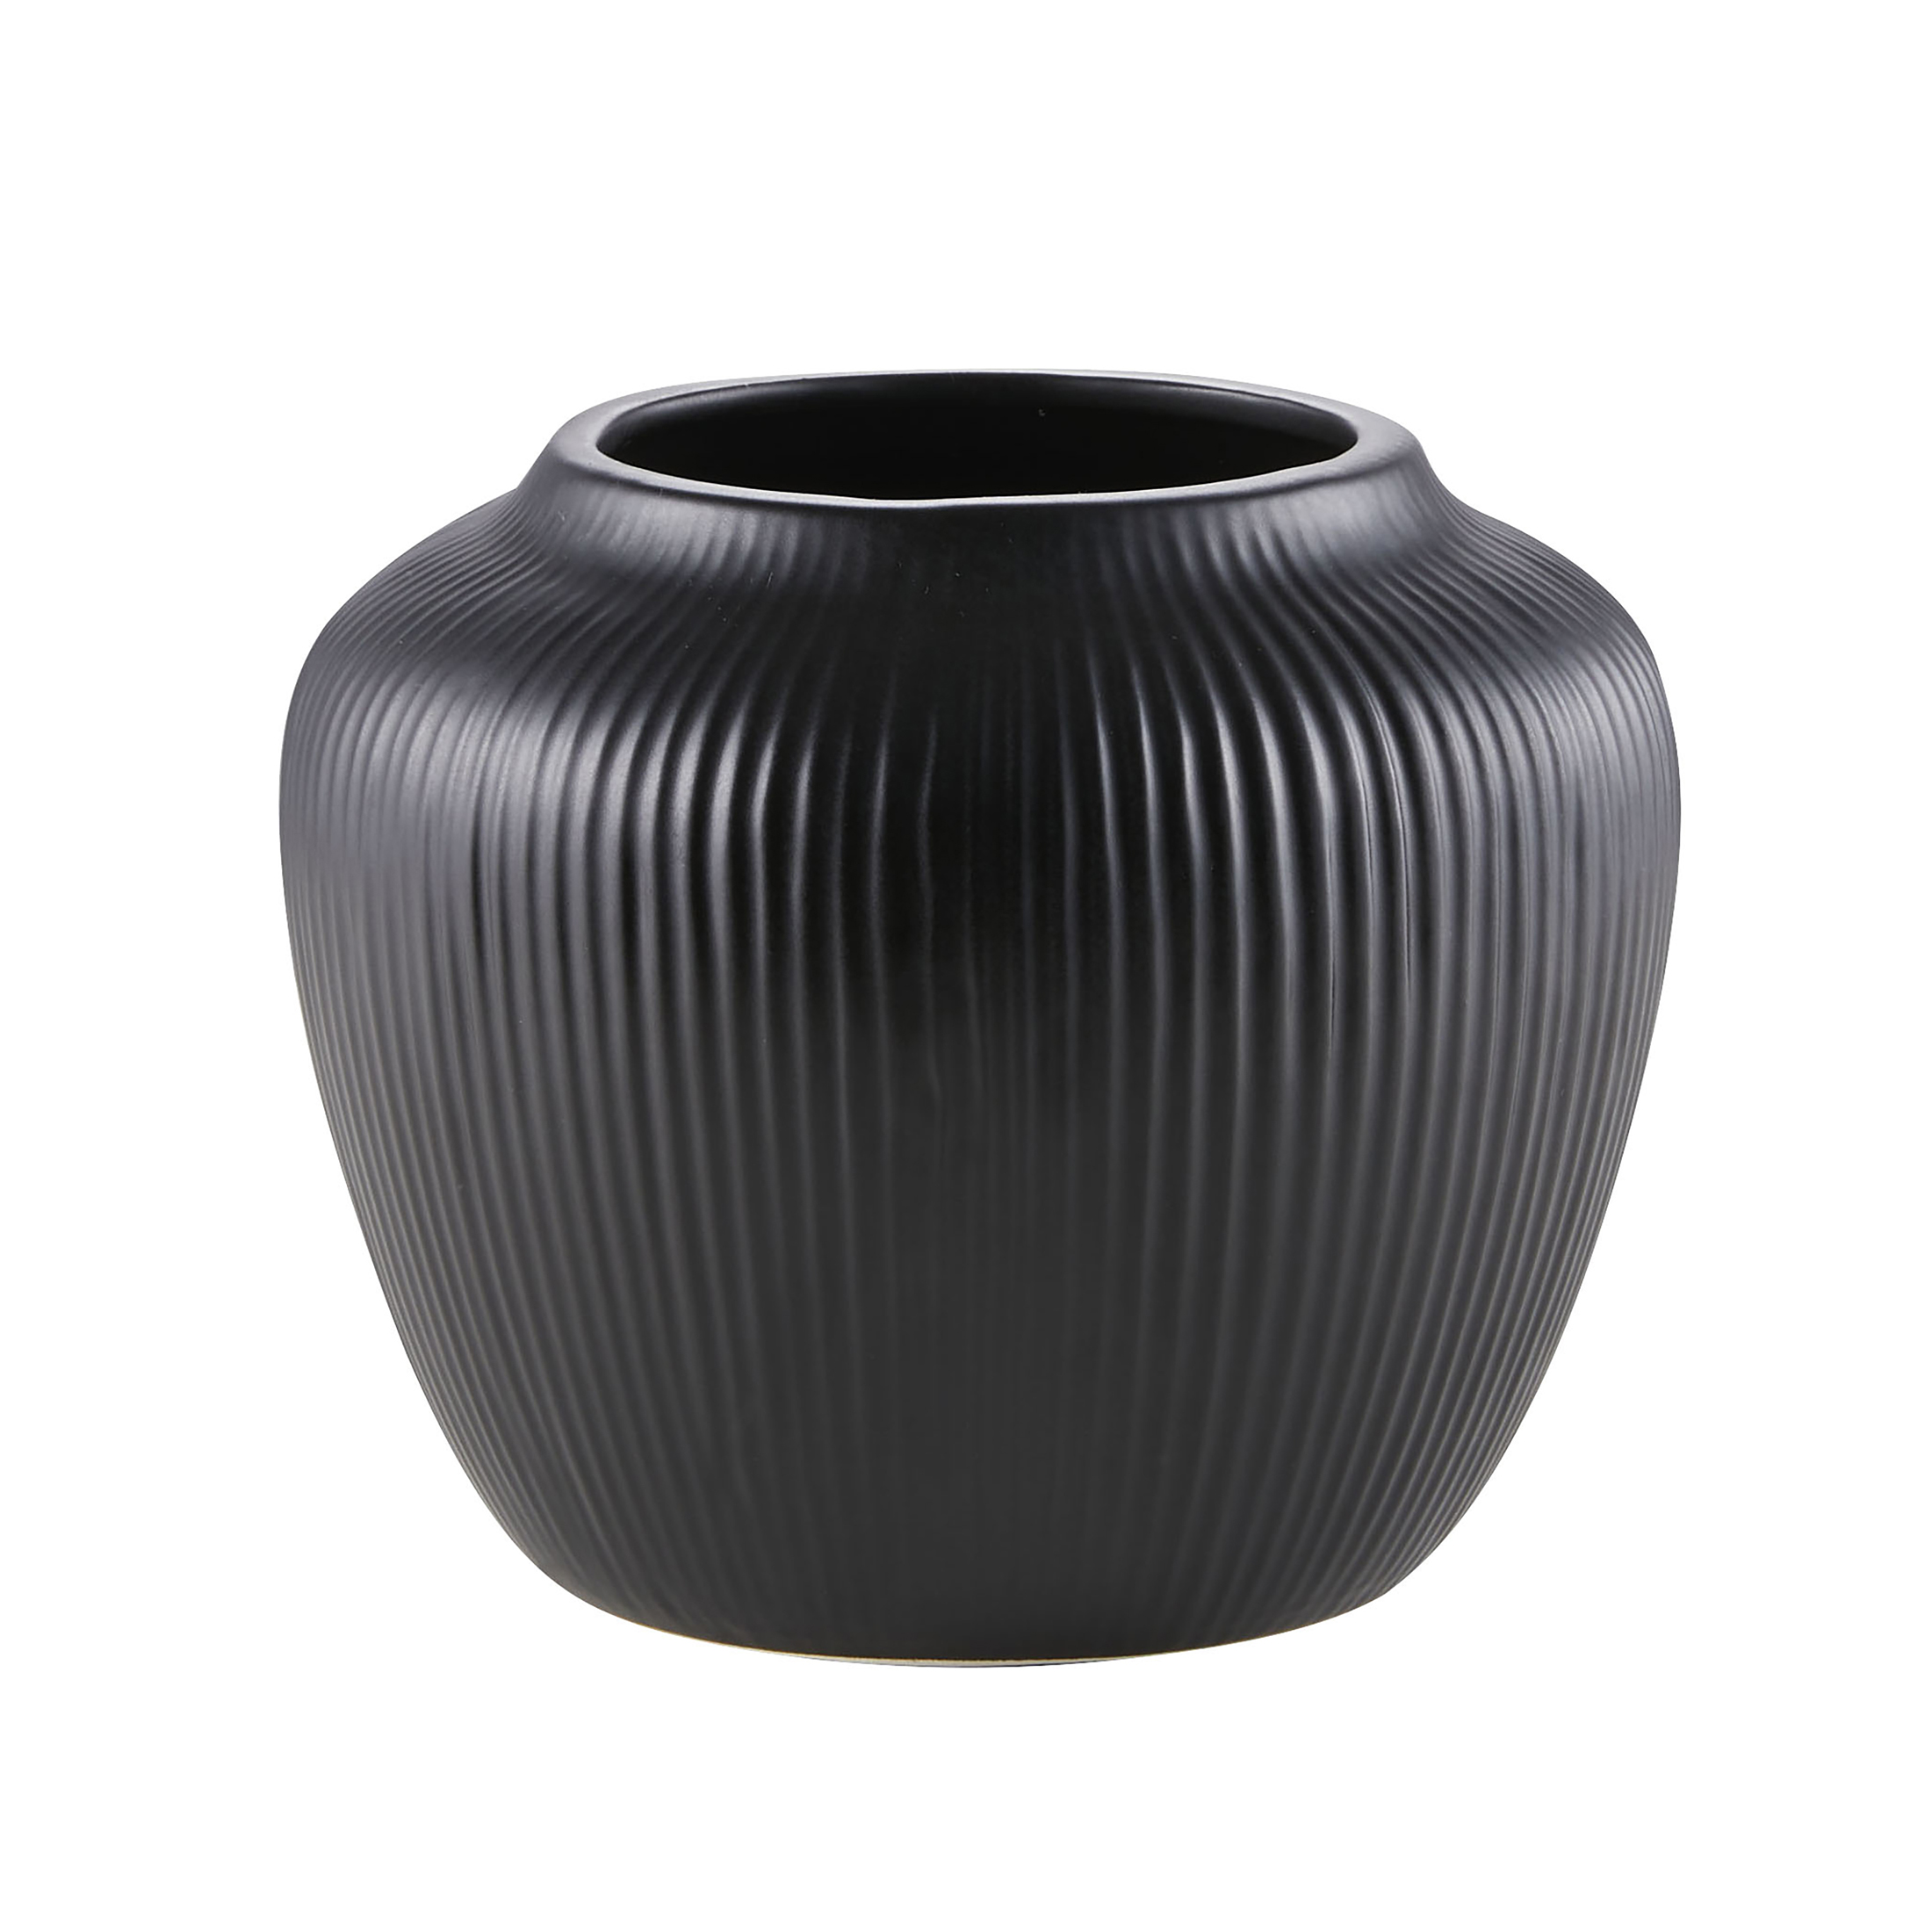 My Texas House 5" Black Textured Stripe Round Stoneware Vase - image 1 of 5